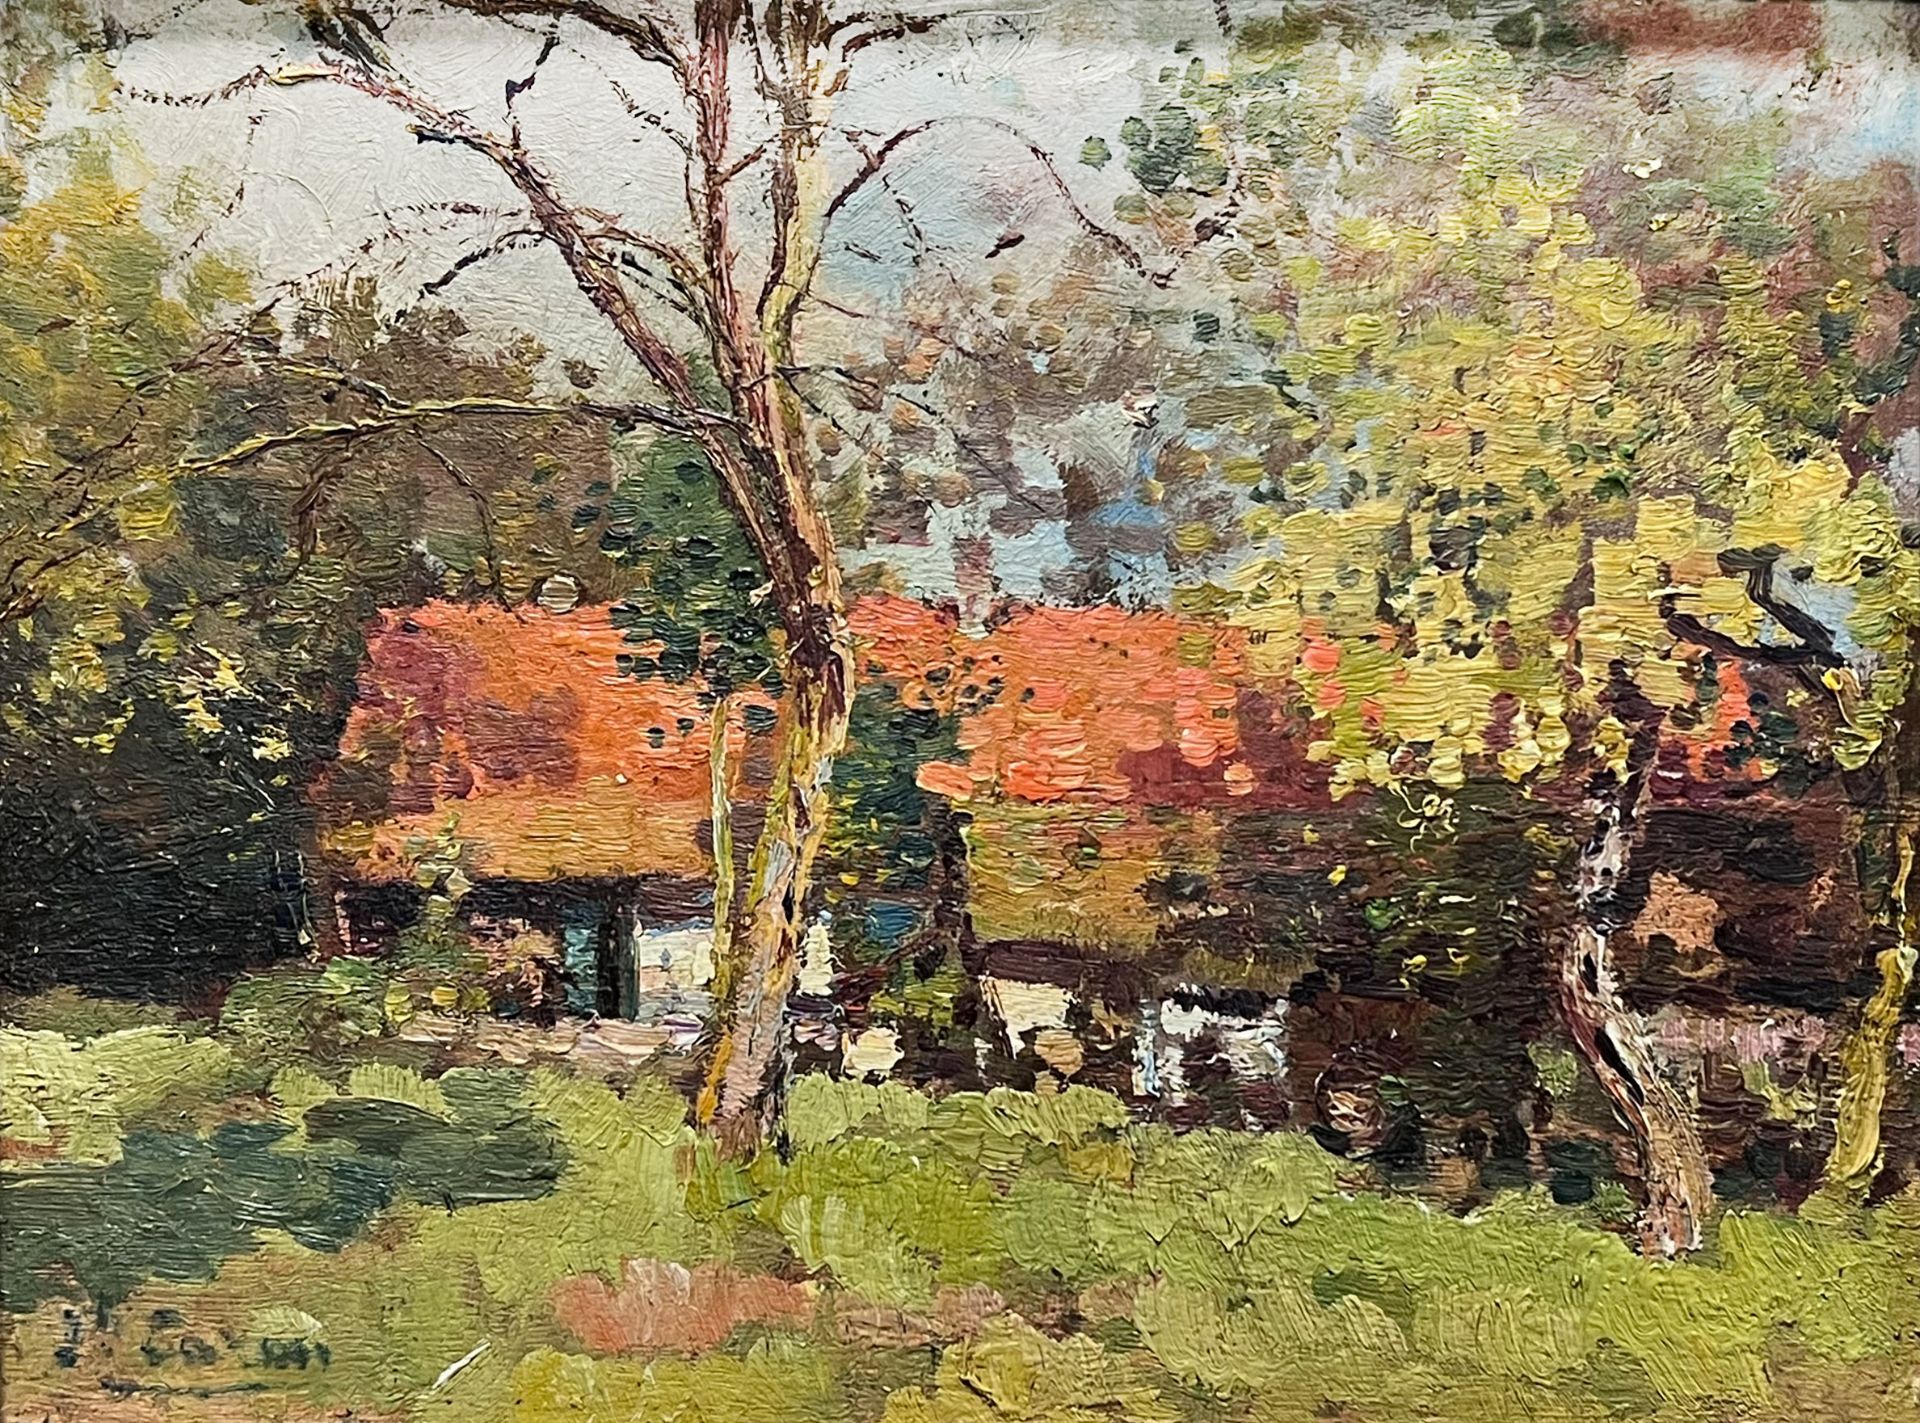 Joseph CARON (1866 - 1944). "Old farmhouse in Zuen". Dated 1915.